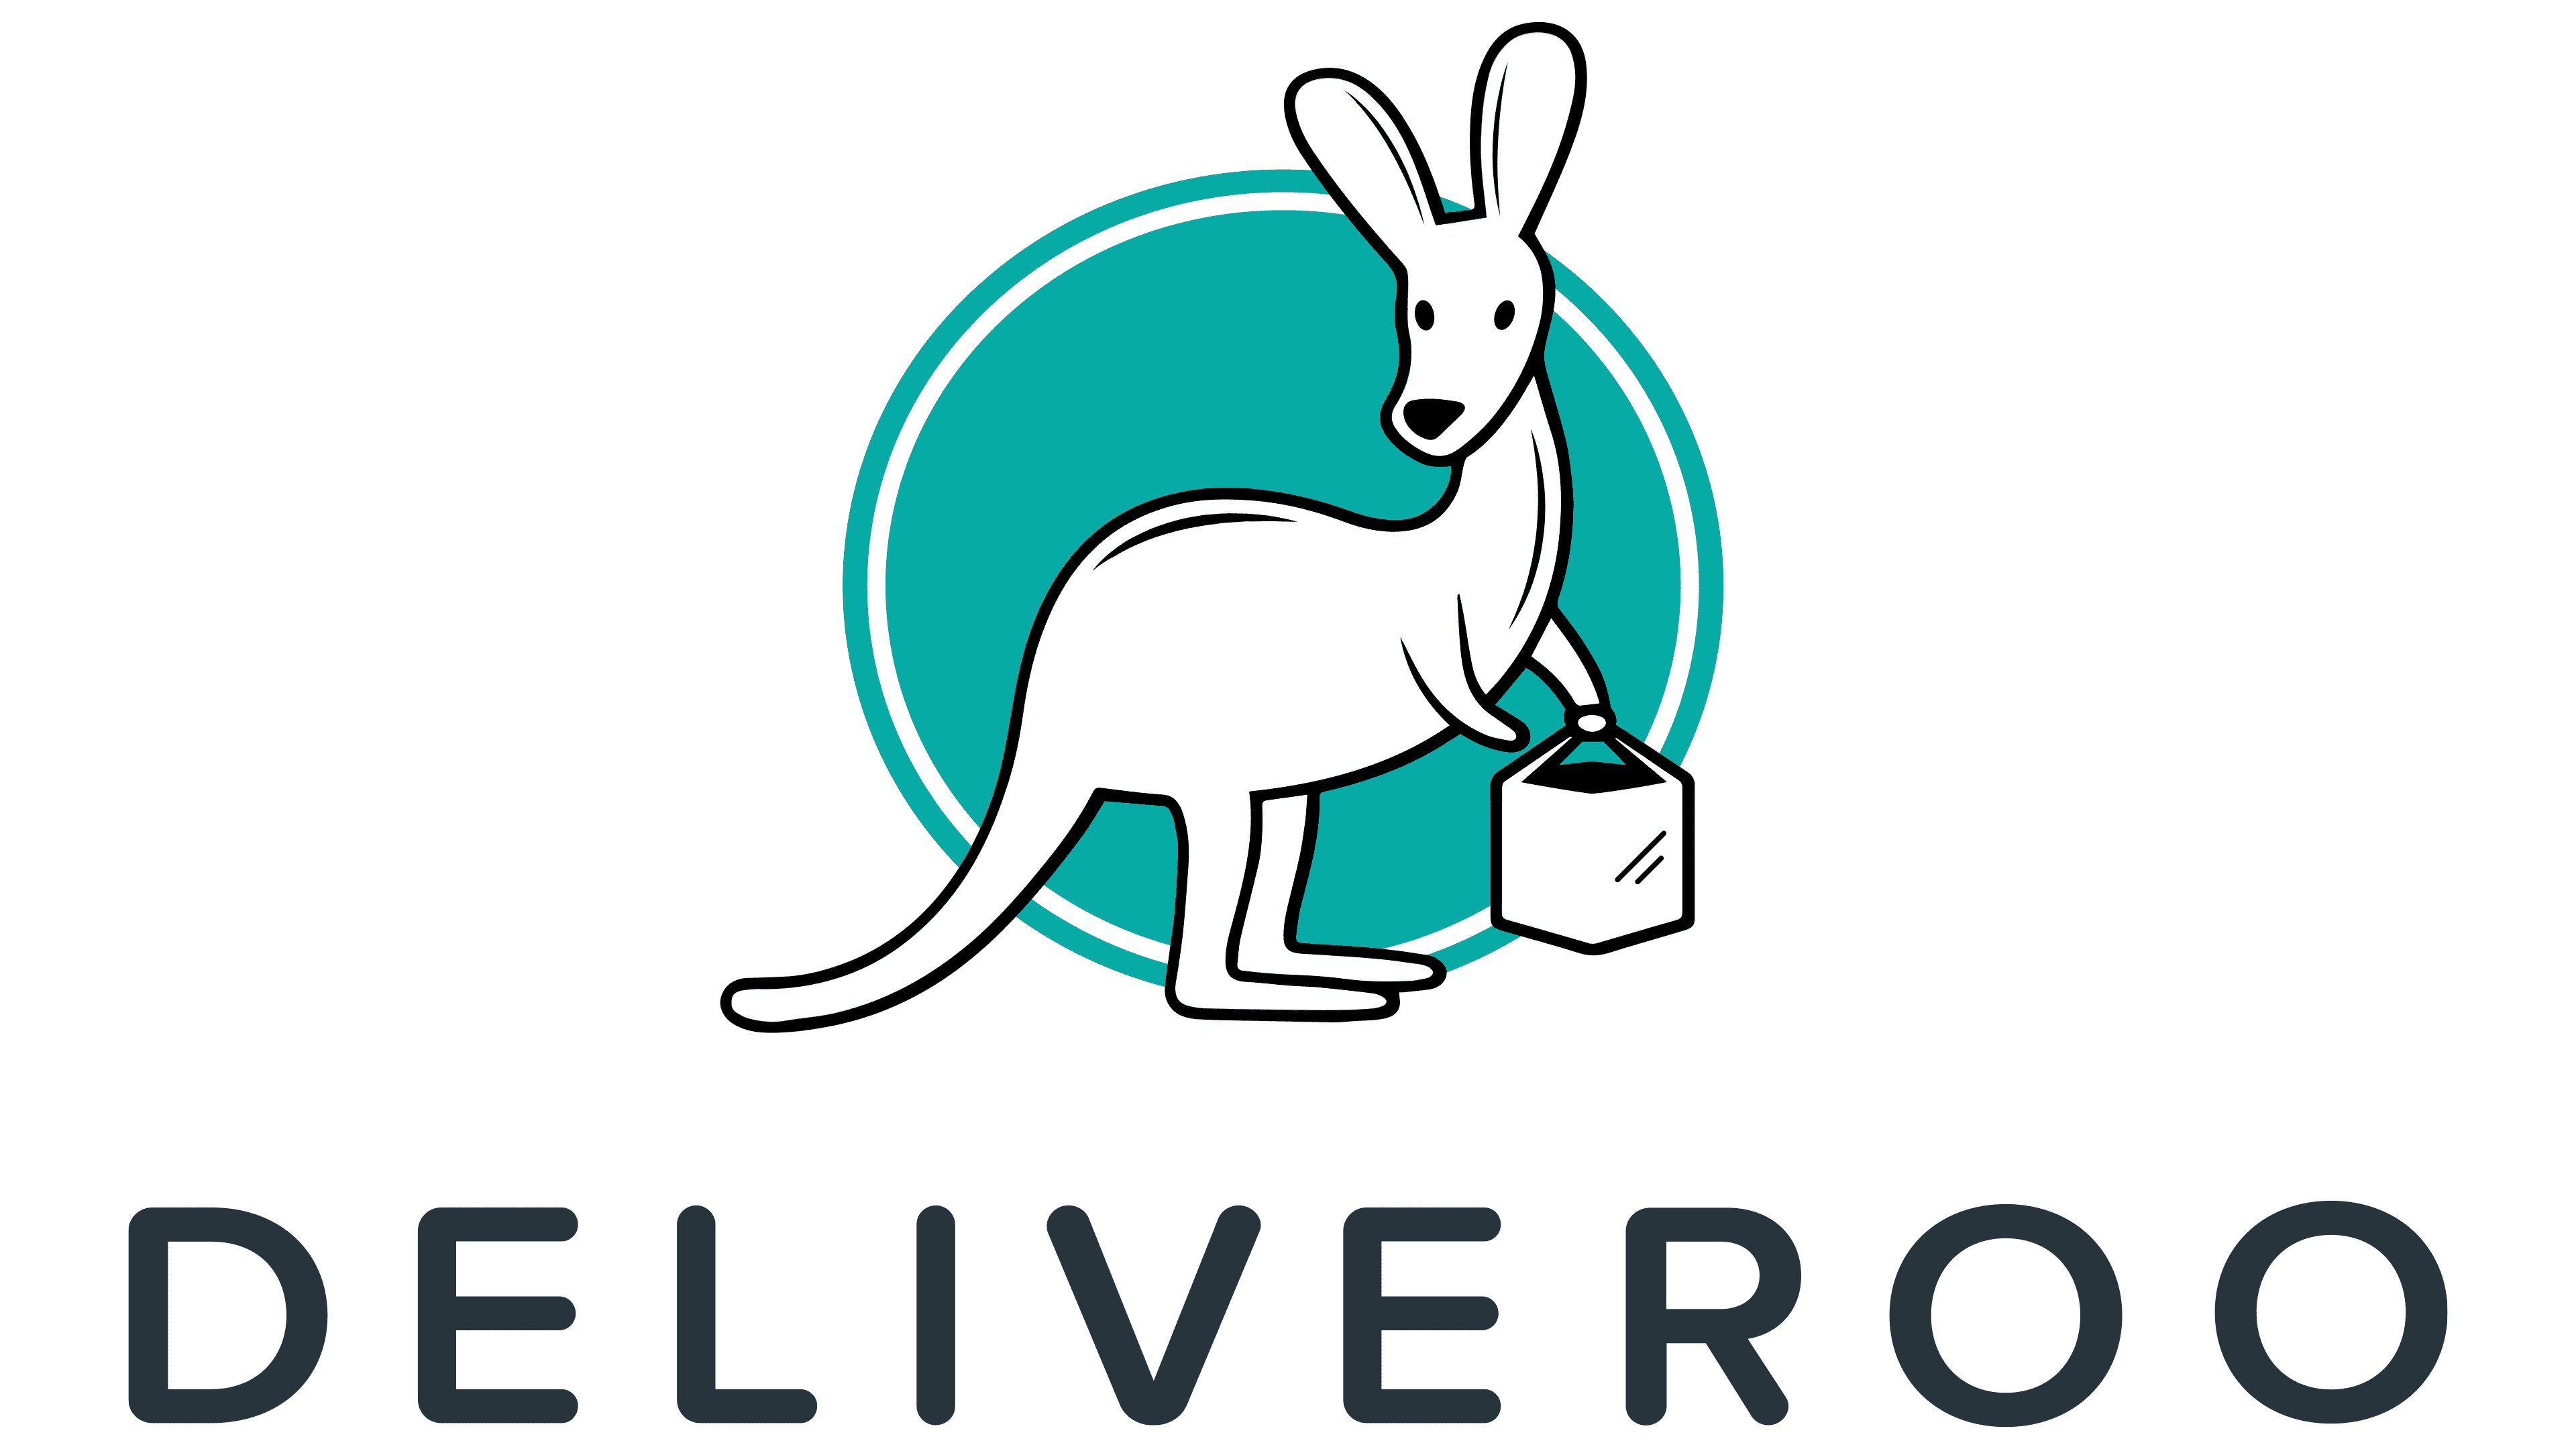 Most Famous Logos with a Kangaroo